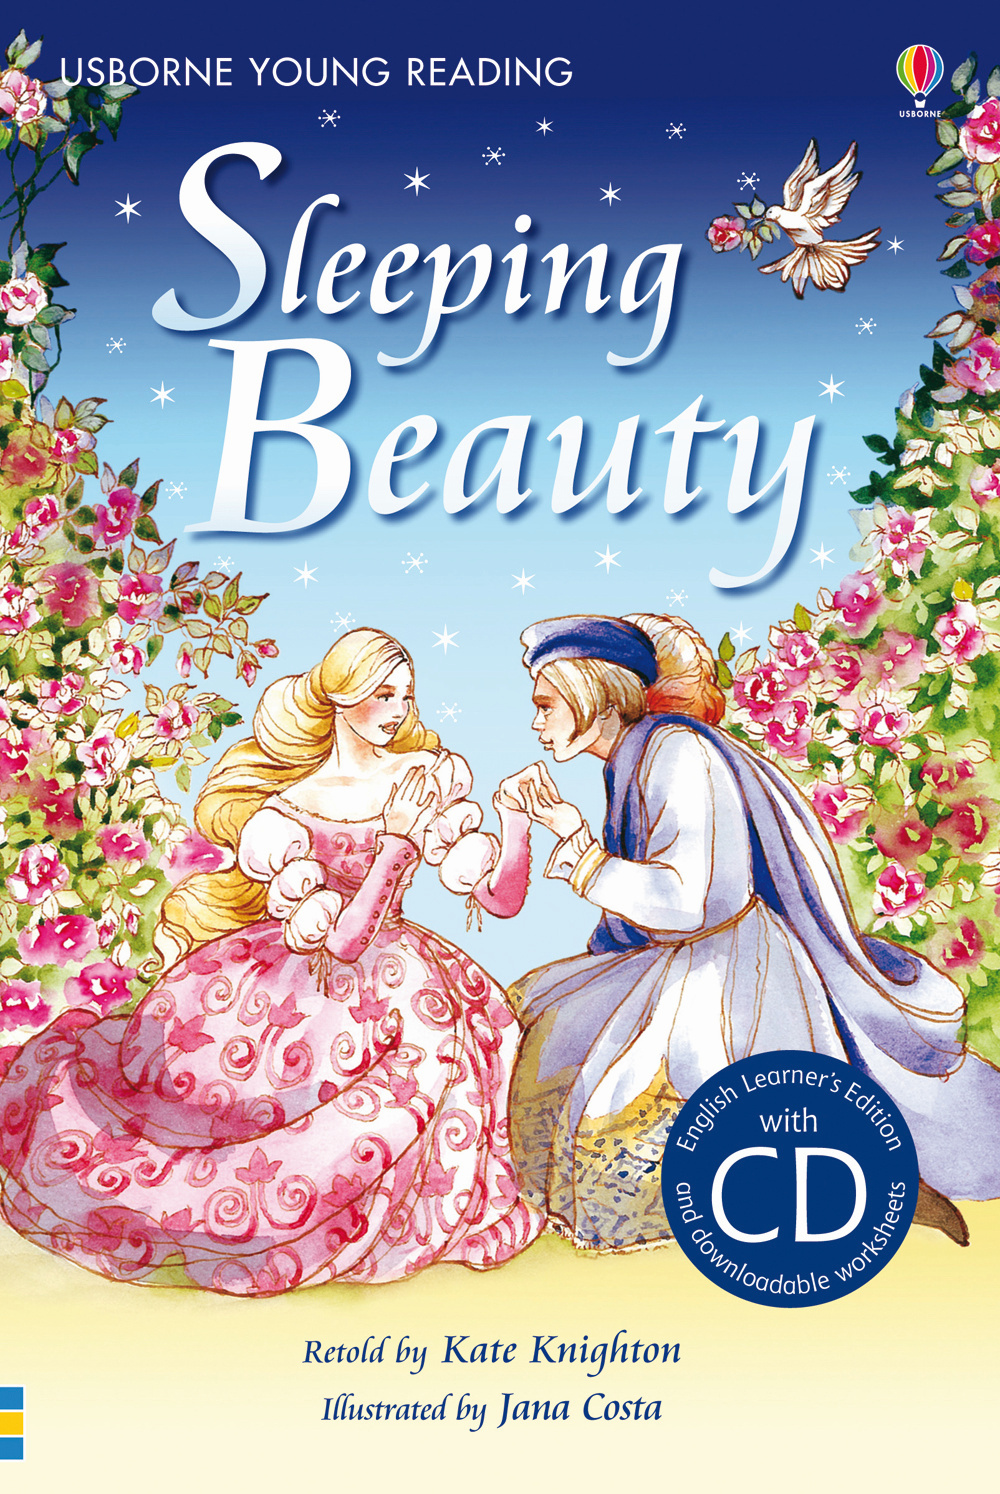 Sleeping beauty. Con CD Audio